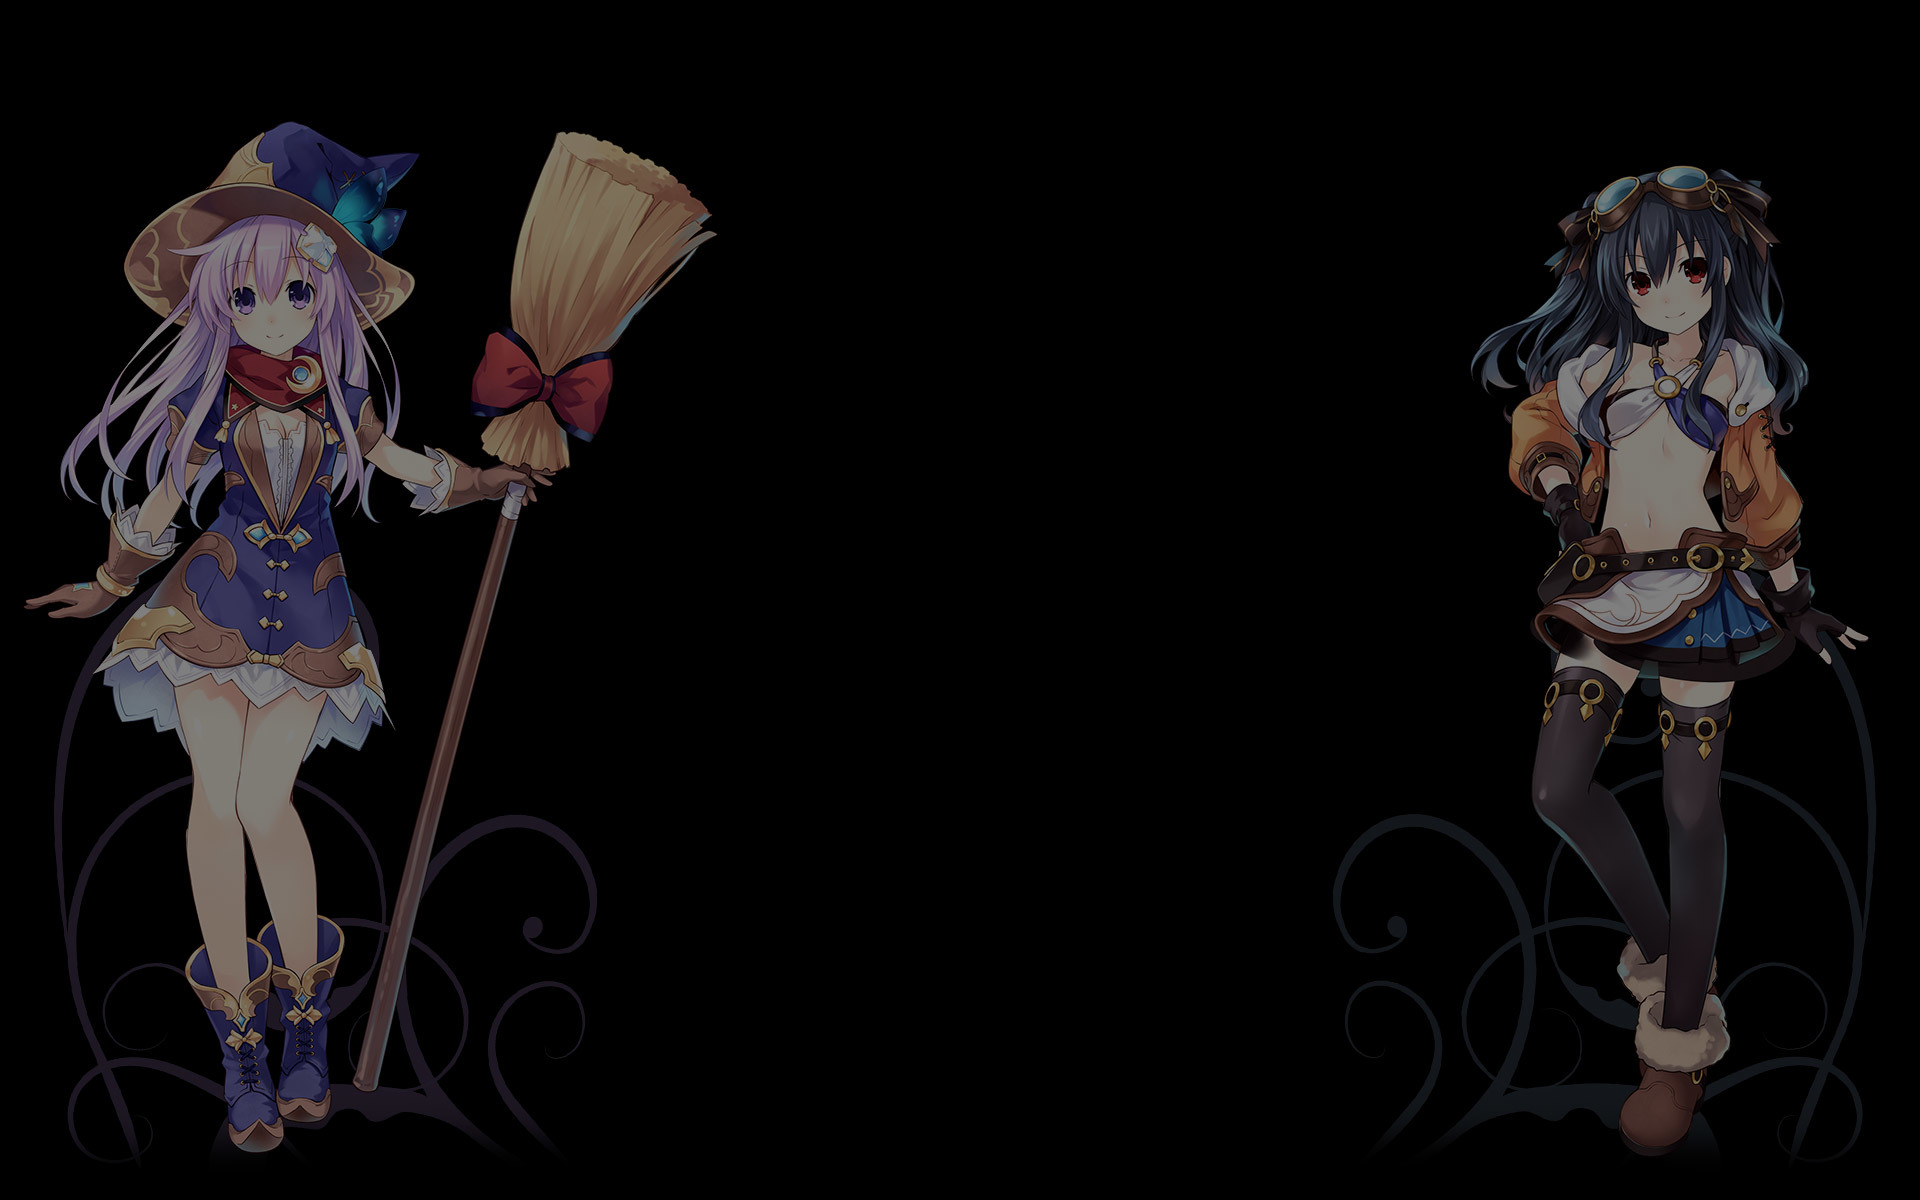 Cyberdimension Neptunia 4 Goddesses Online Wallpaper 003 Nepgear and Uni